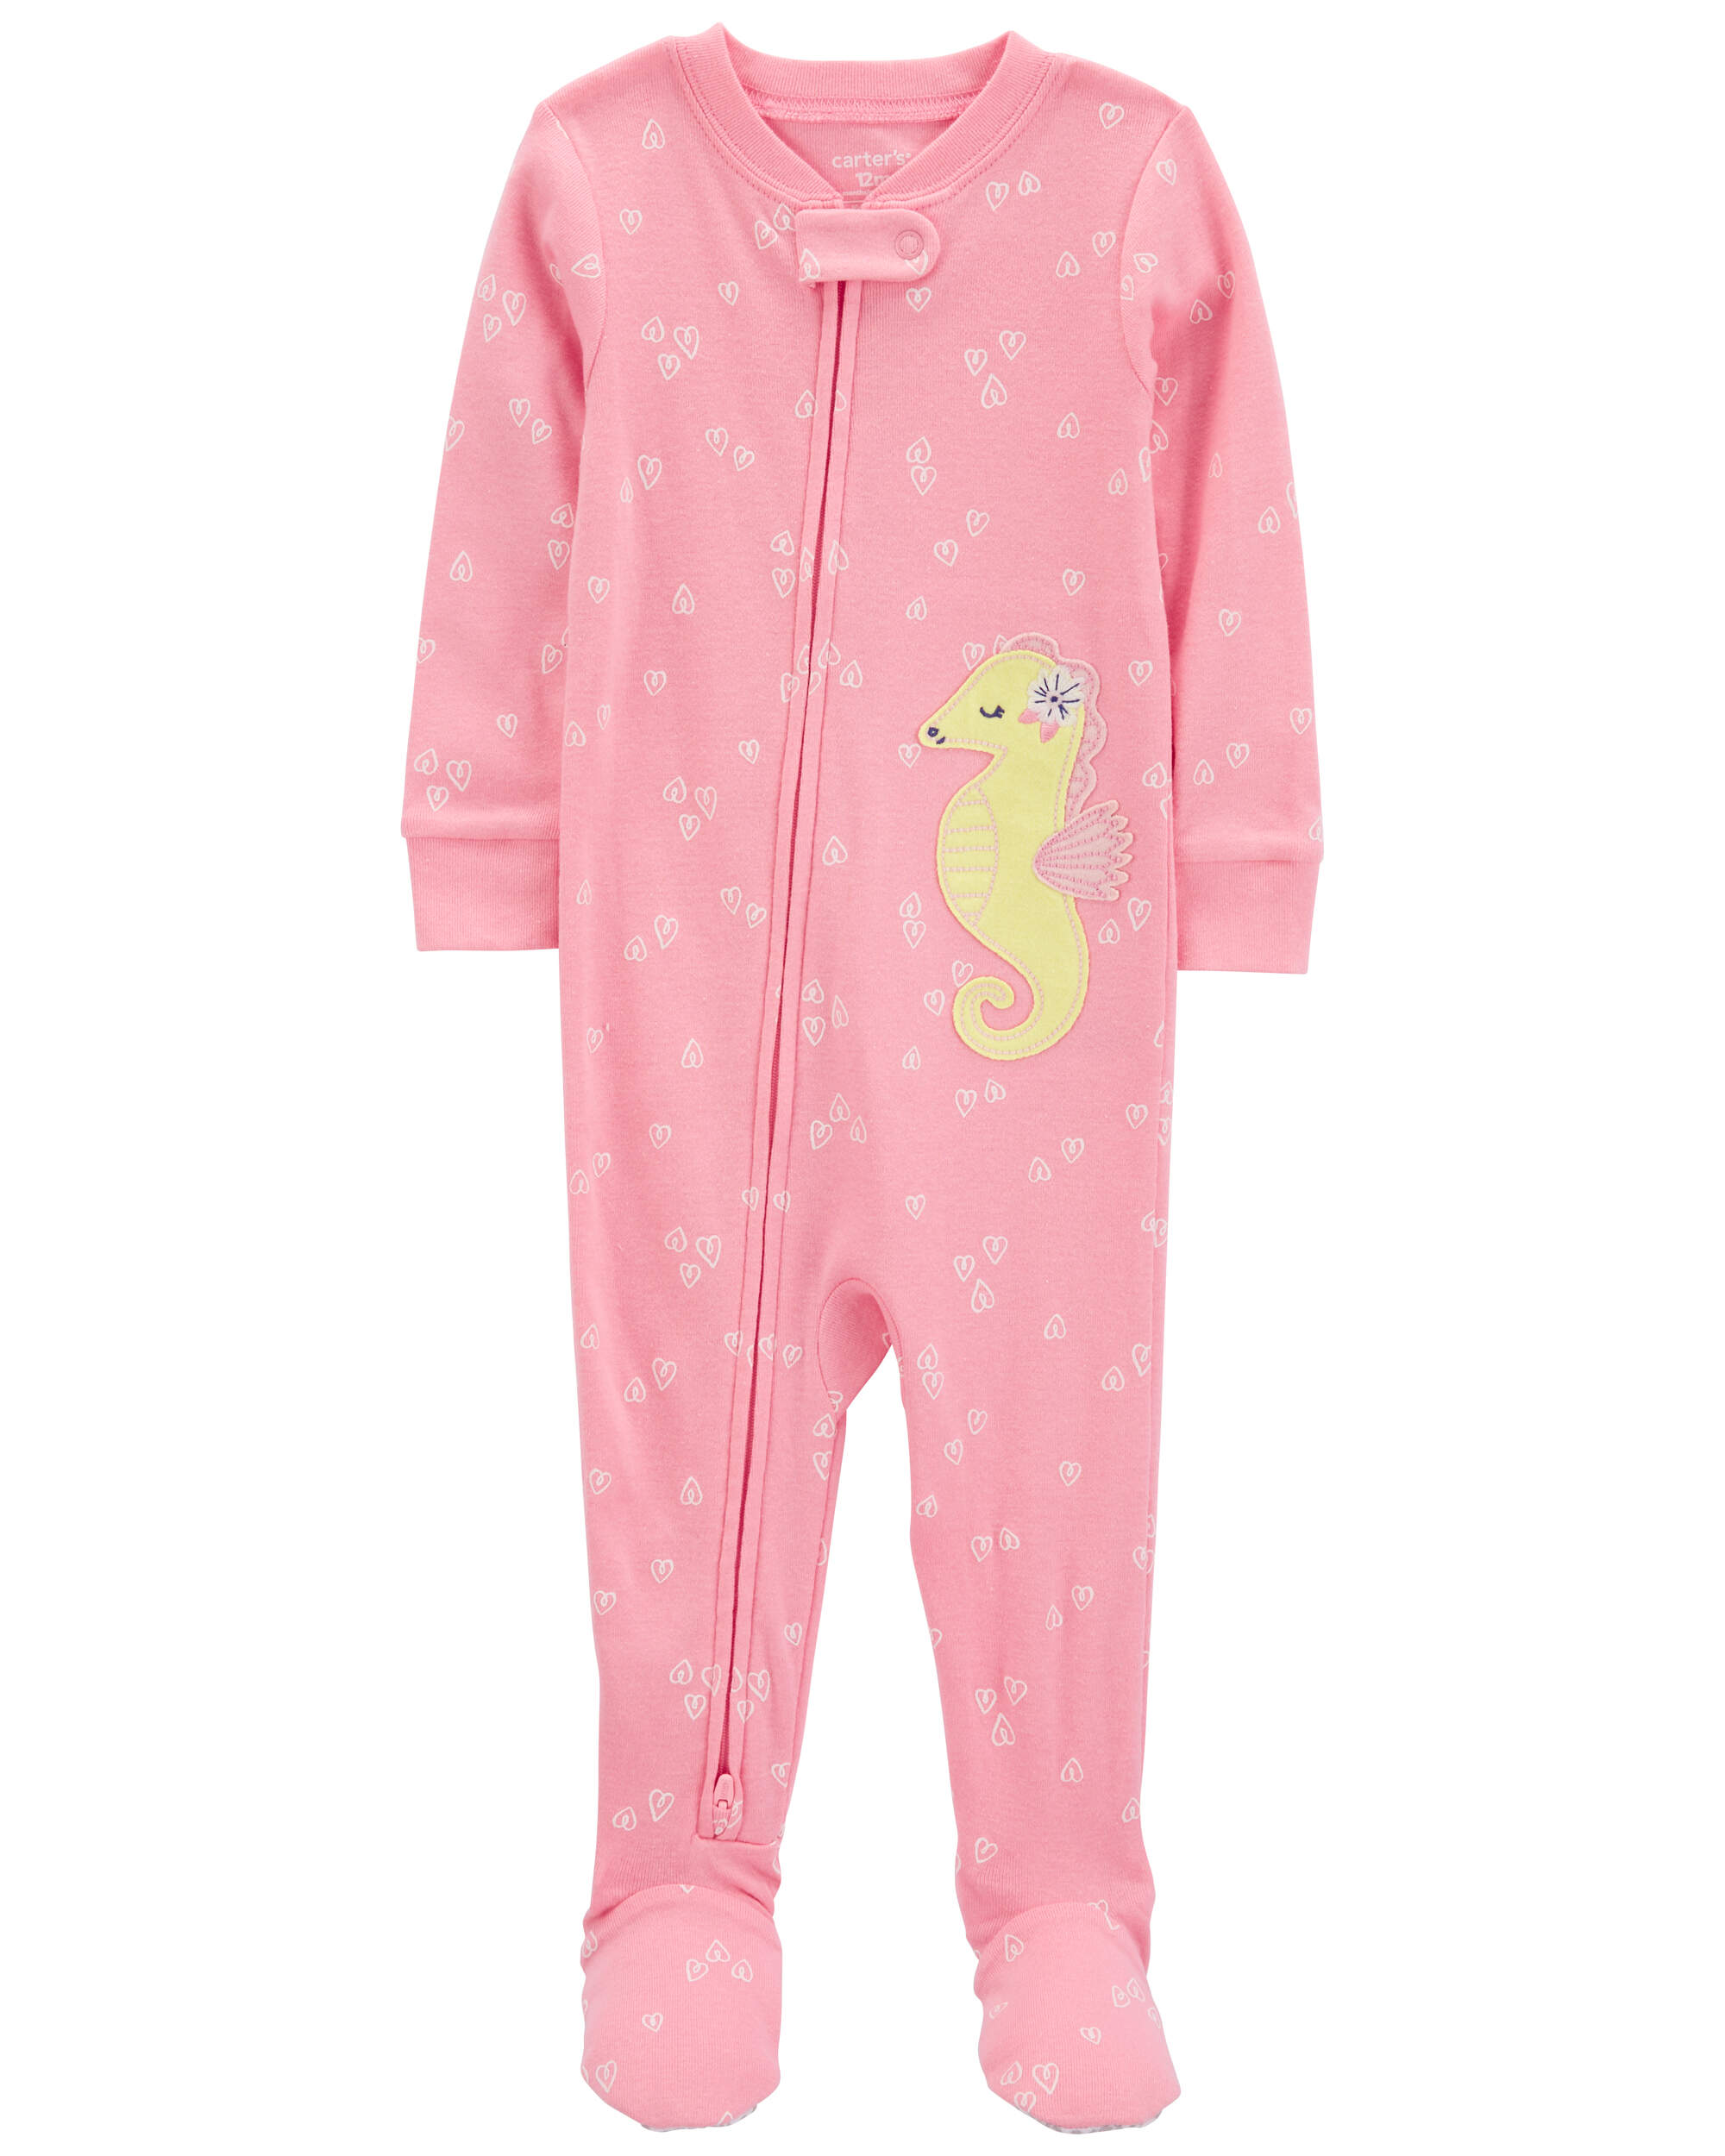 Toddler 1-Piece Sea Horse 100% Snug Fit Cotton Footie Pyjamas